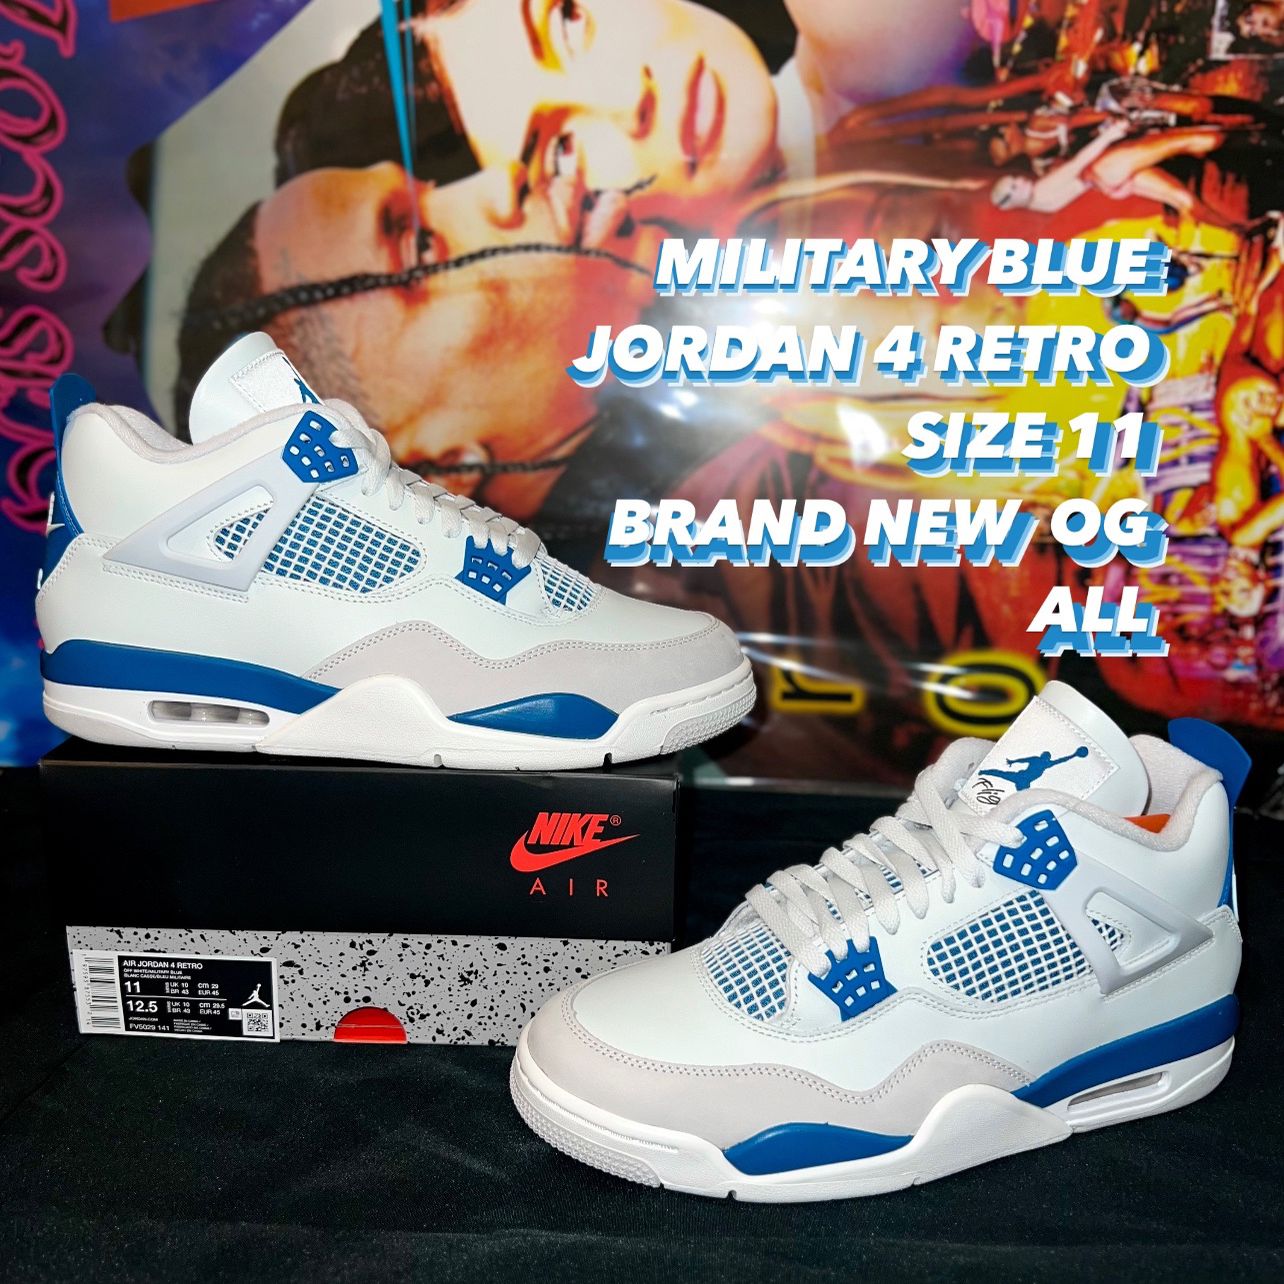 Jordan 4 Military Blue Size 11